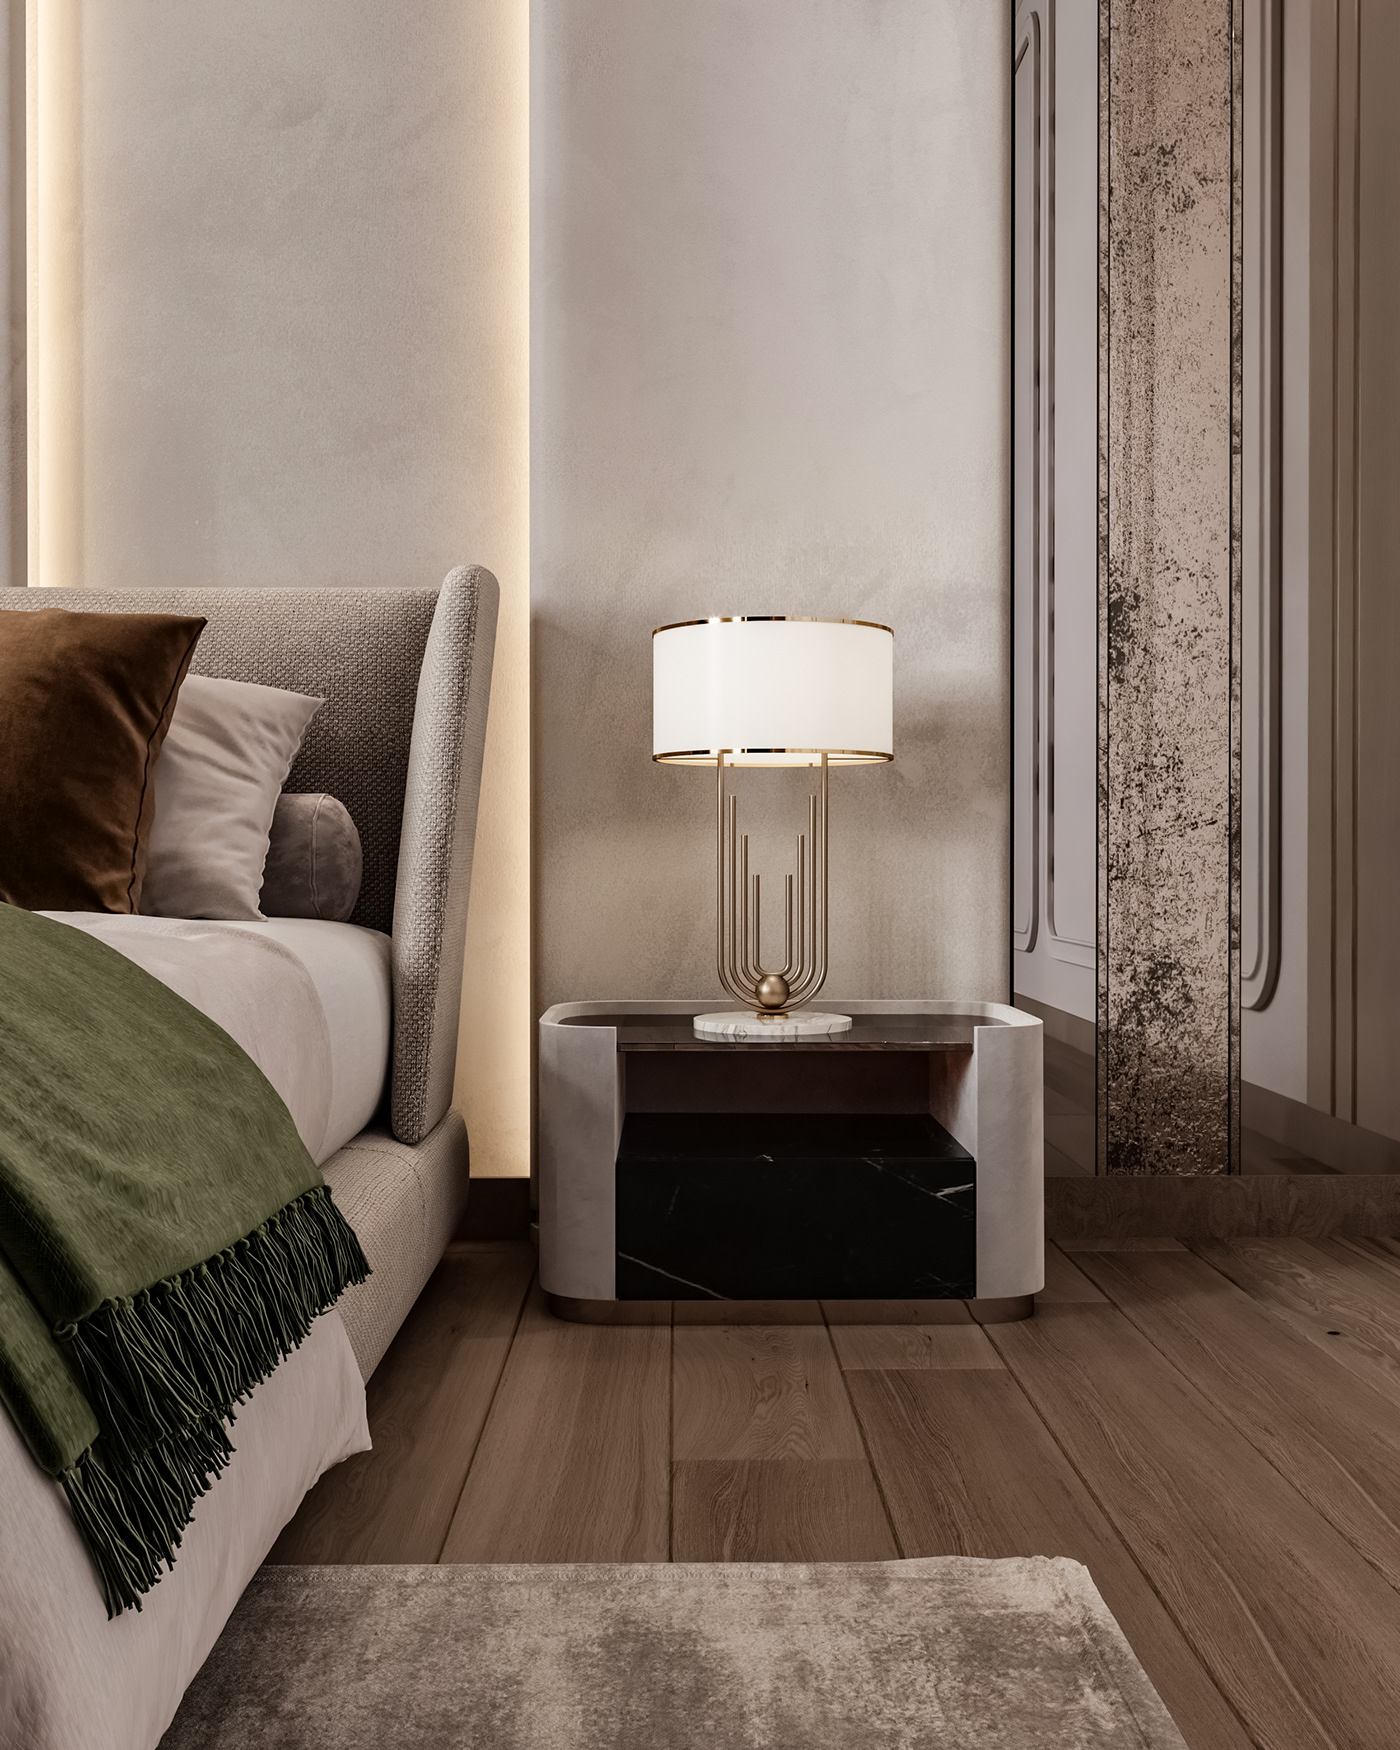 decoration furniture design 3d modeling visualization architecture interior design  Luxury Design bedroom dressing room